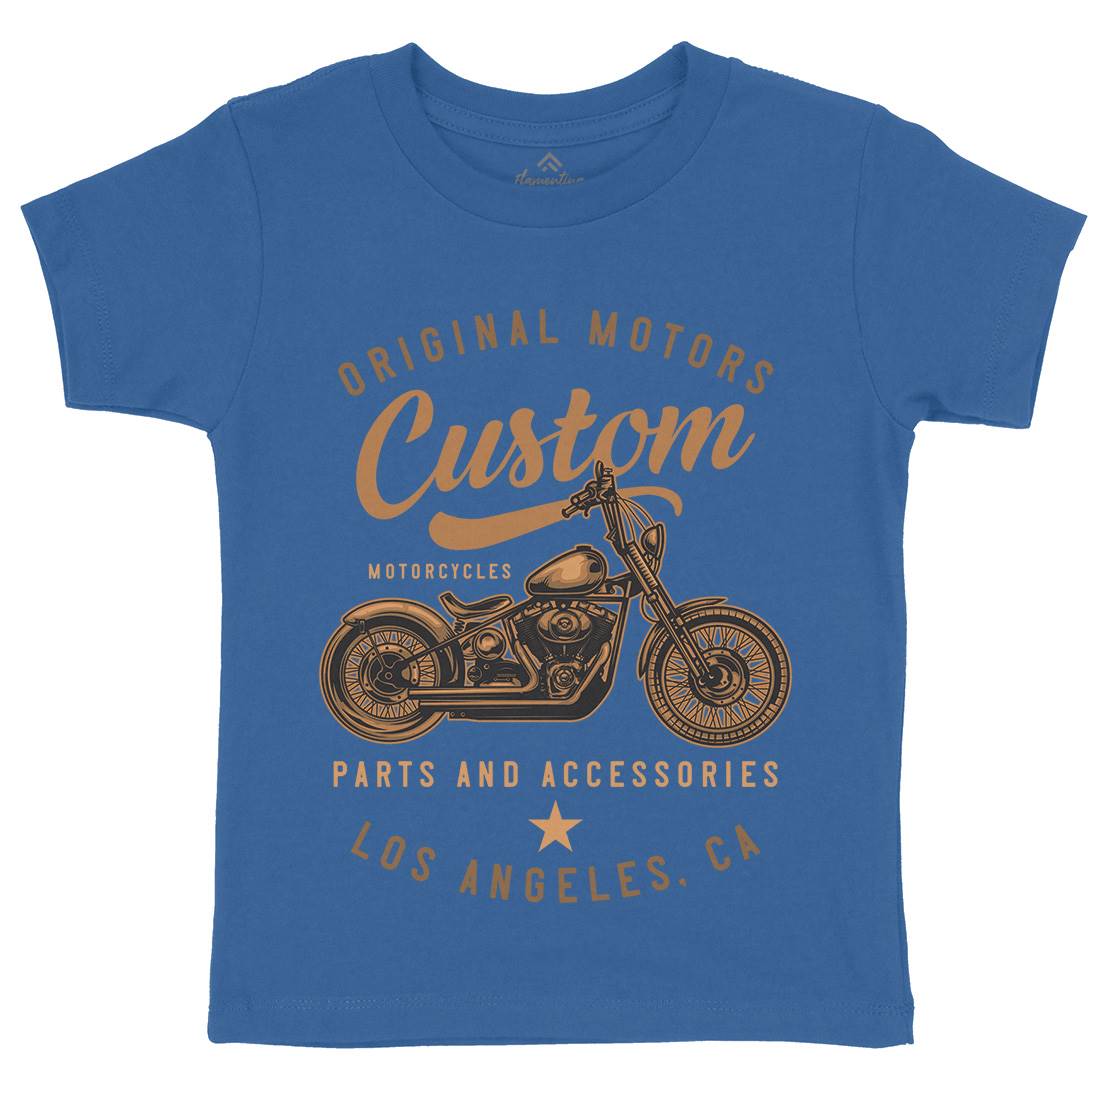 Los Angeles Kids Crew Neck T-Shirt Motorcycles B147